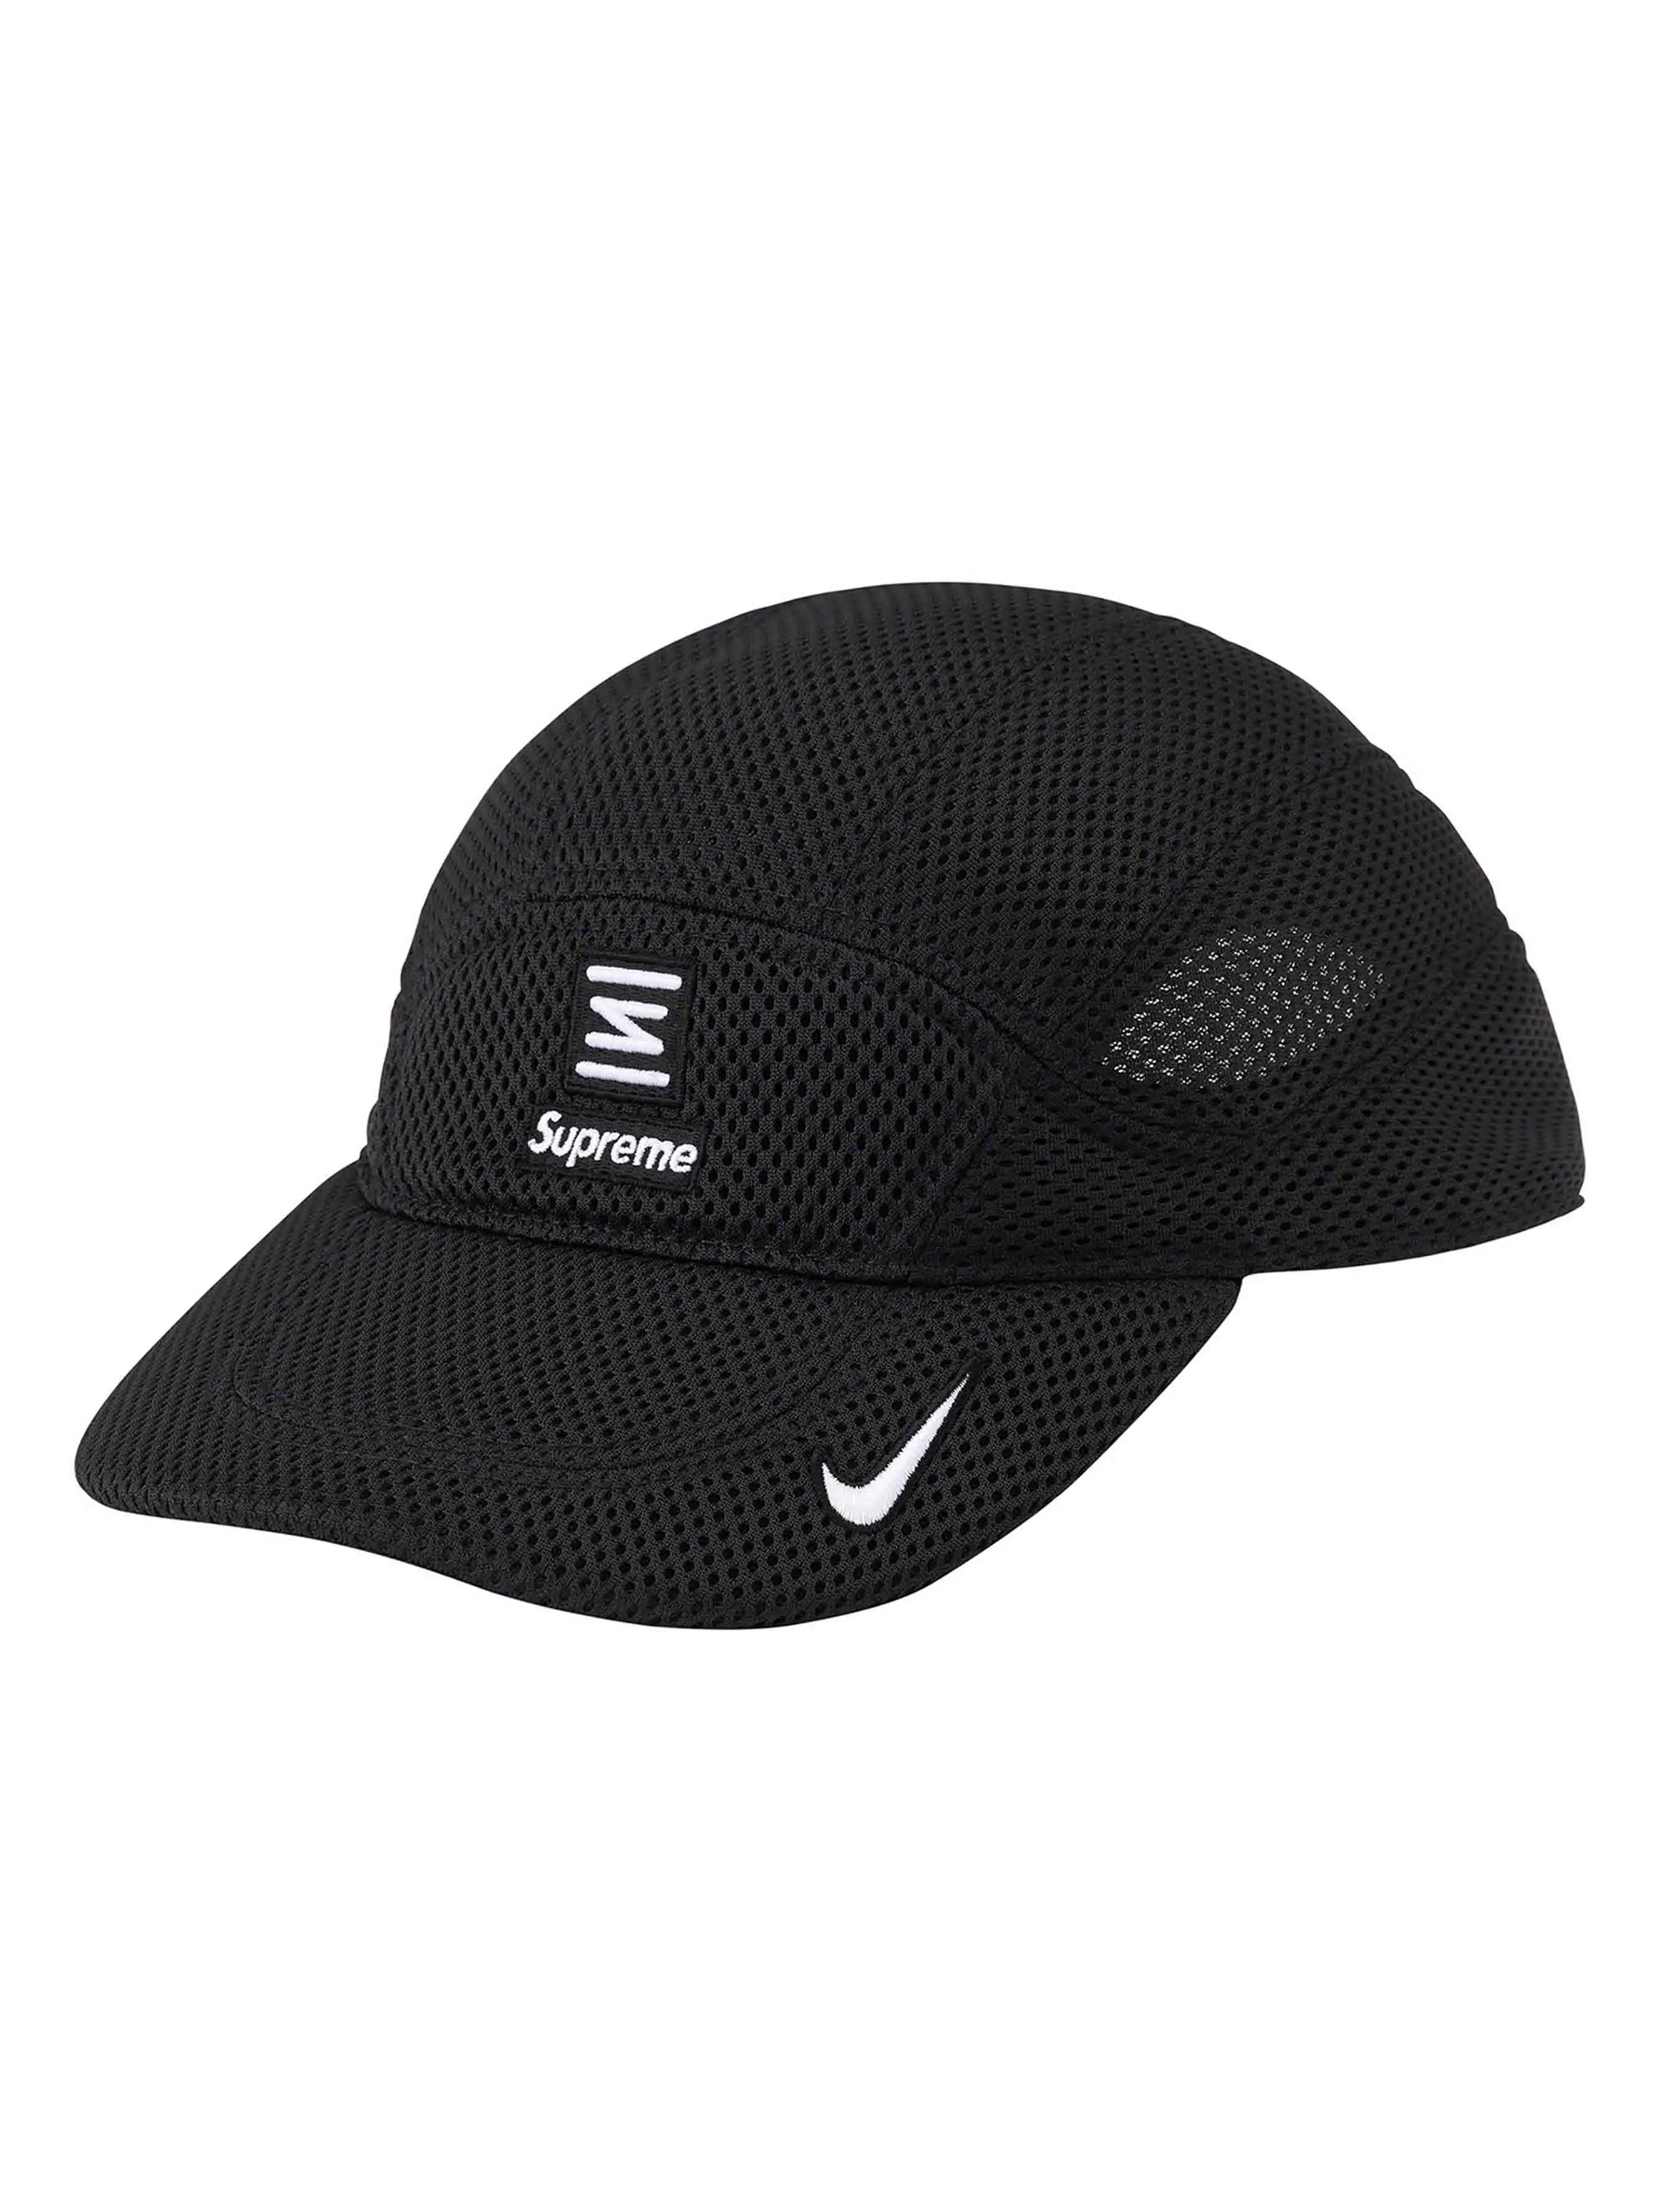 Supreme Nike Shox Running Hat Black - Prior